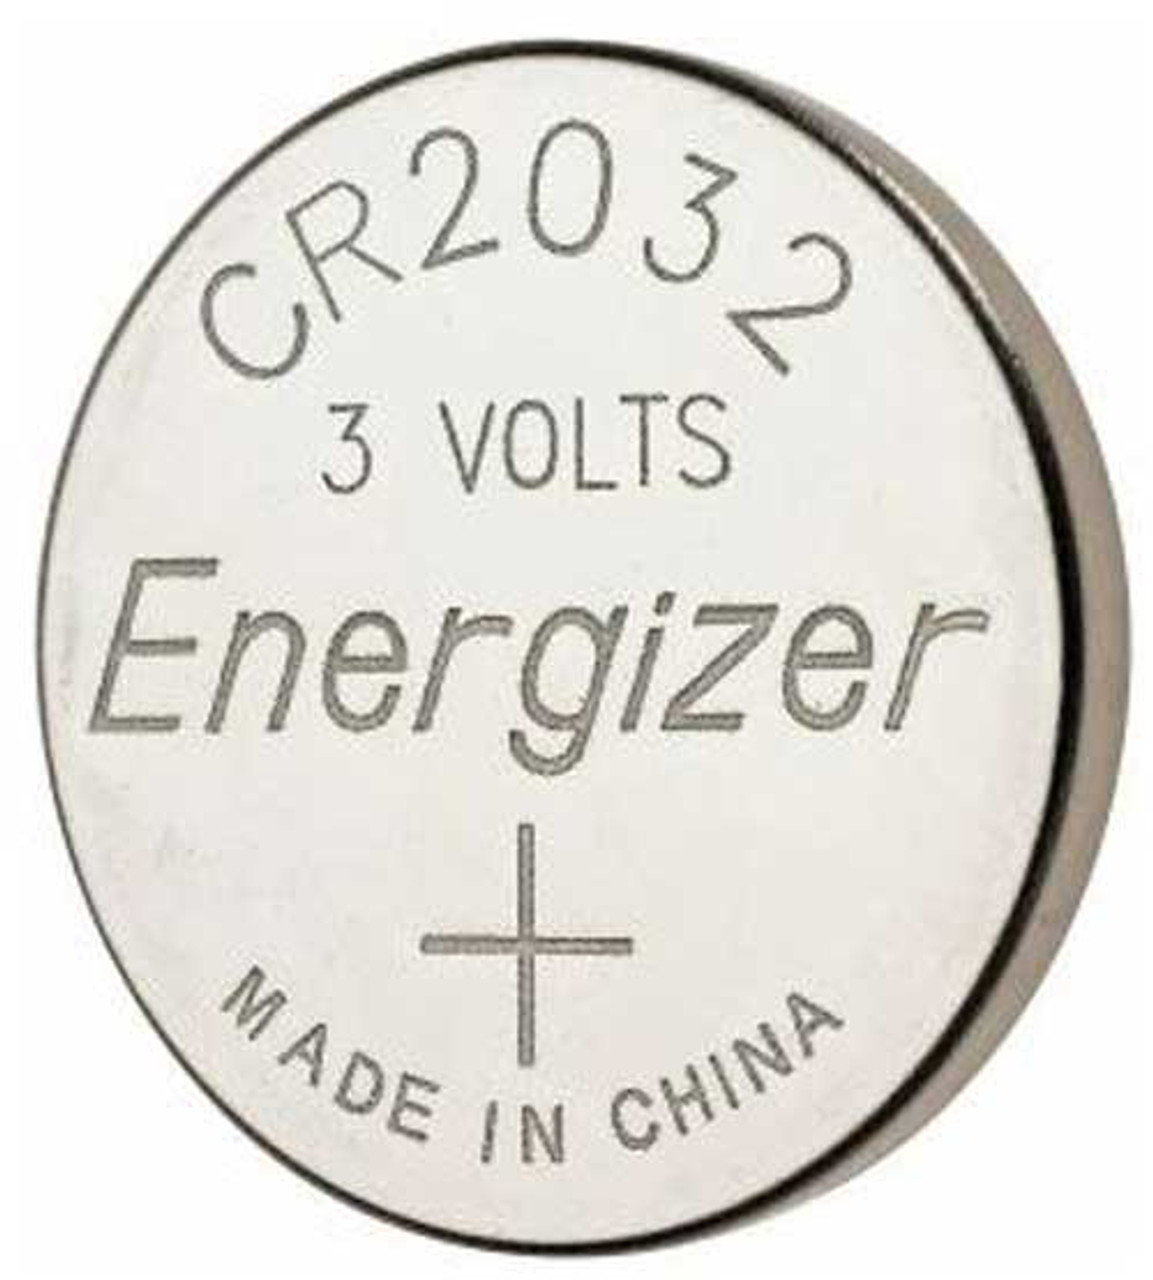 10 x NEW energizer CR2032 Lithium Battery 3V 